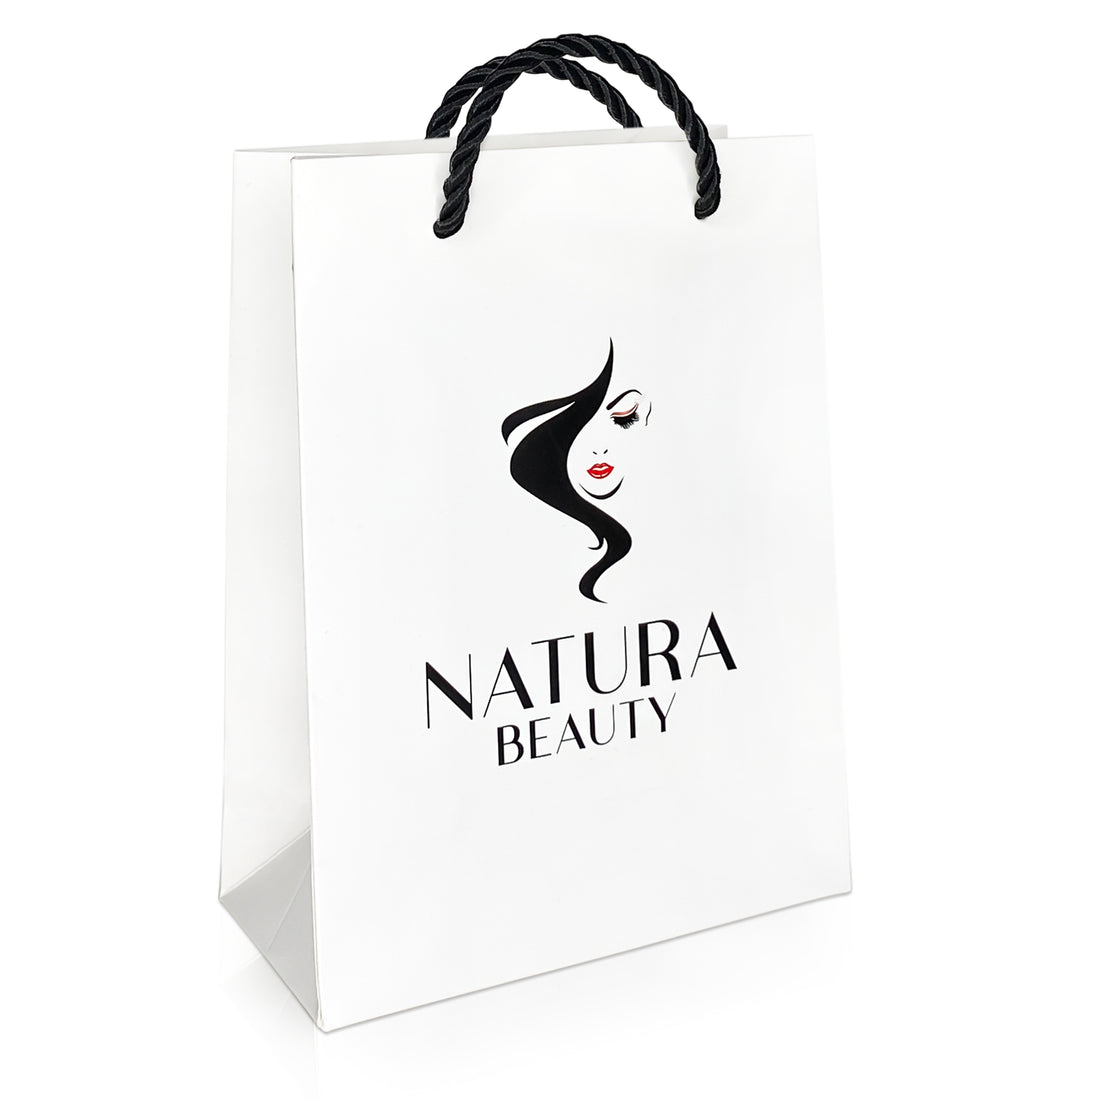 NATURA BEAUTY gift bag